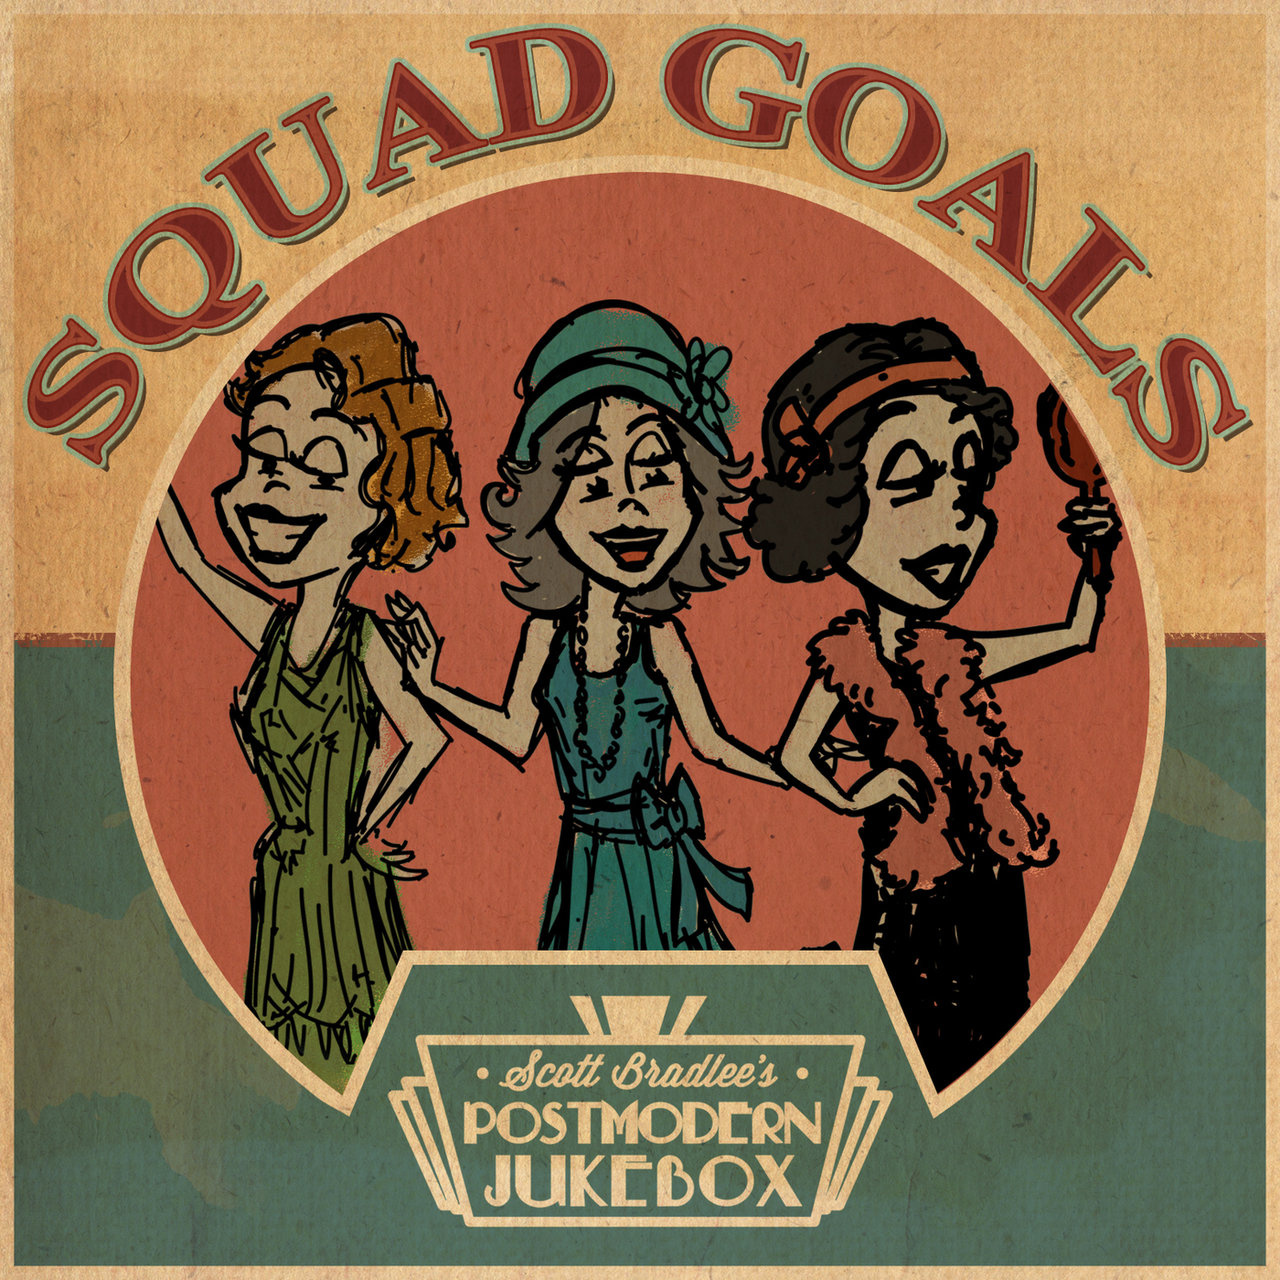 Postmodern Jukebox Squad Goals cover artwork